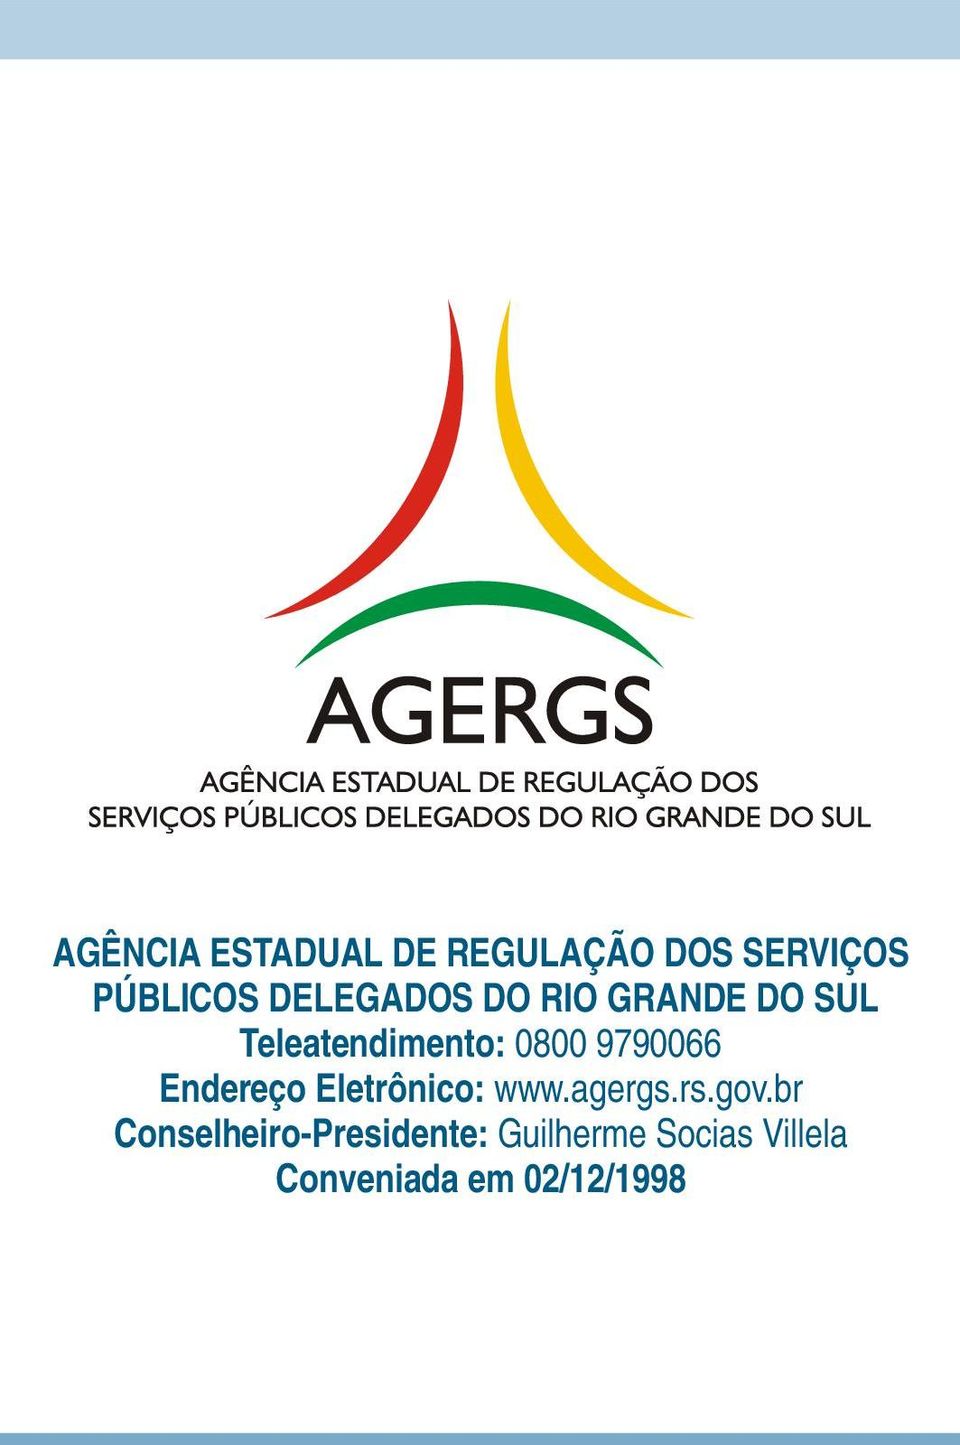 9790066 Endereço Eletrônico: www.agergs.rs.gov.